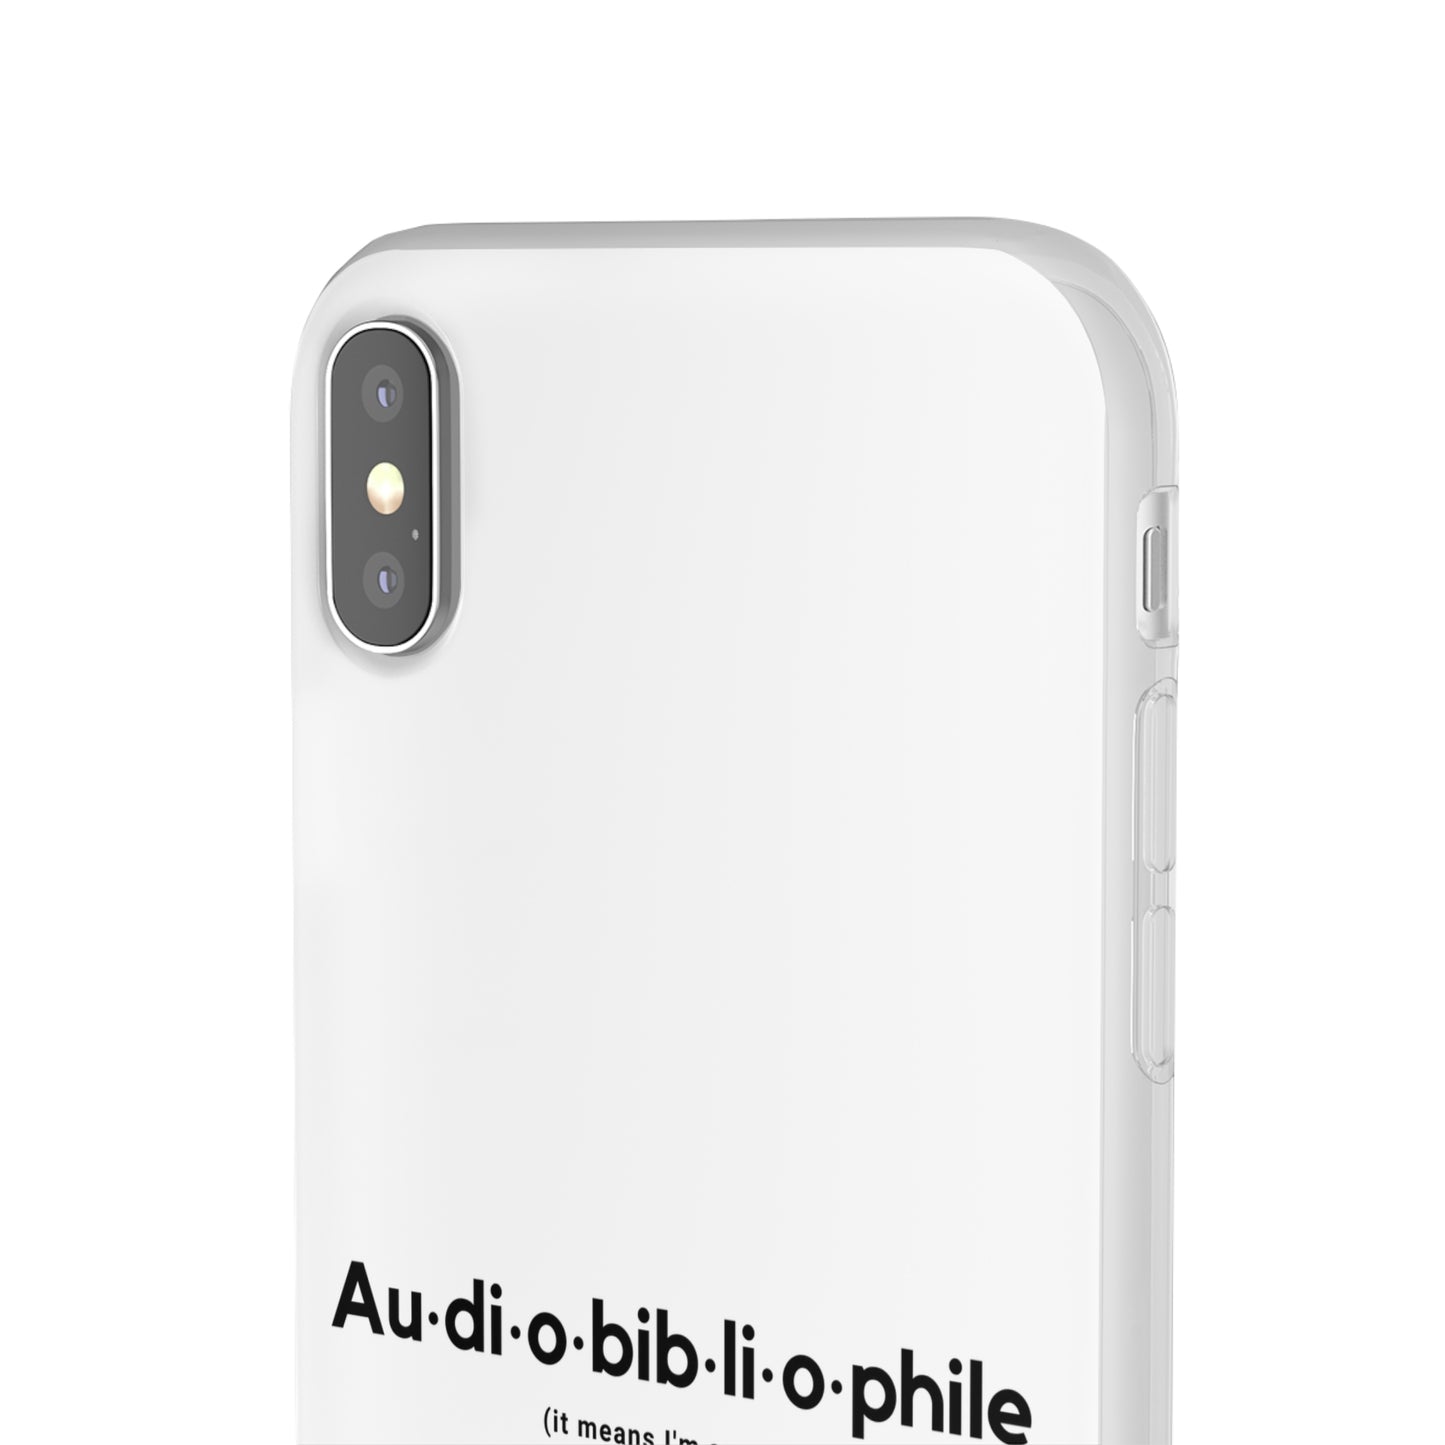 Audiobibliophile Phone Case